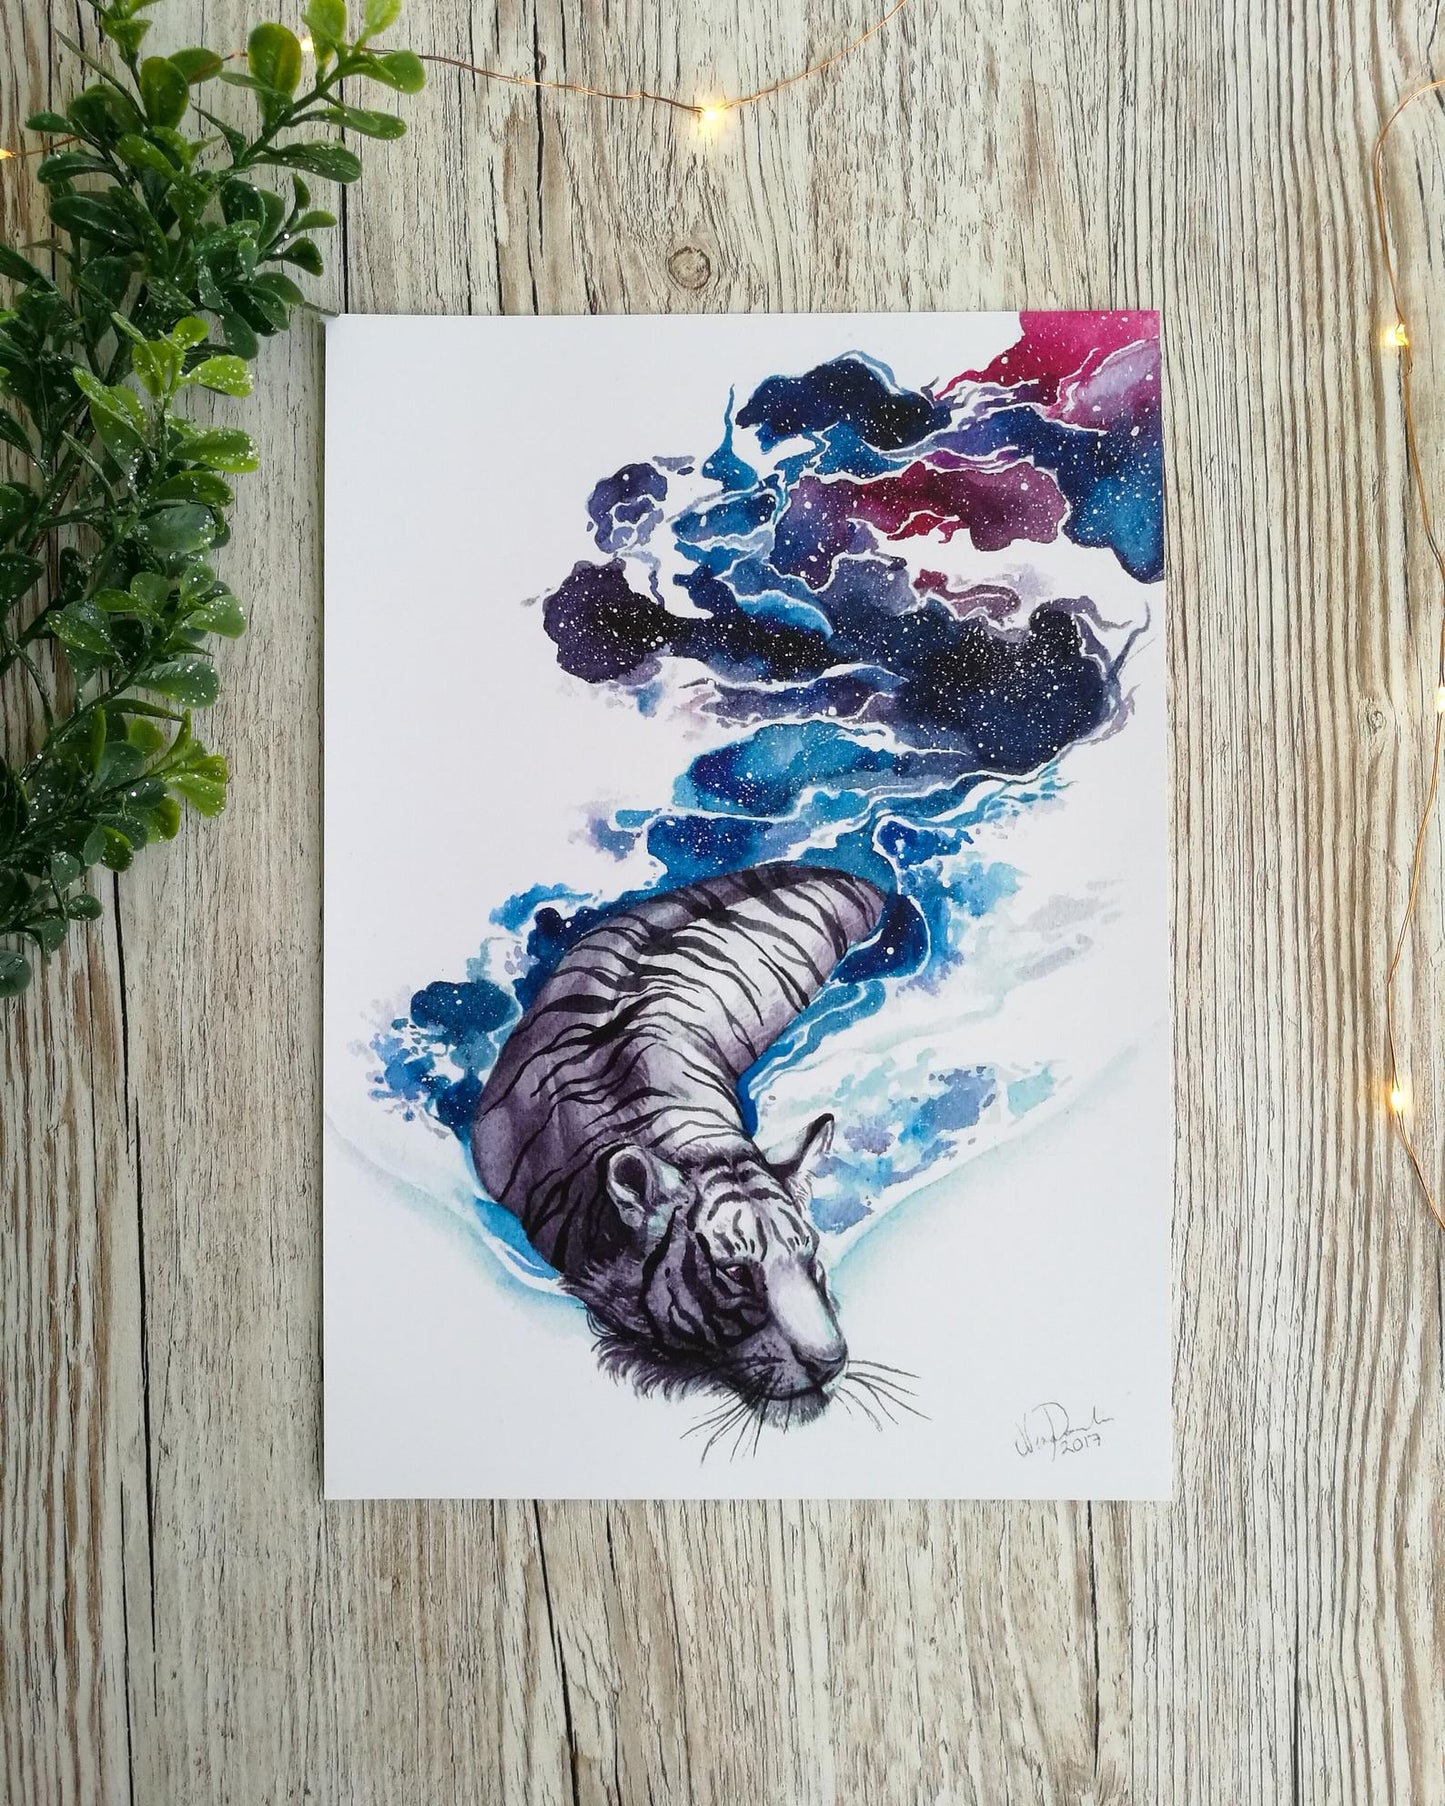 Shinon Art printti Waters of Orion